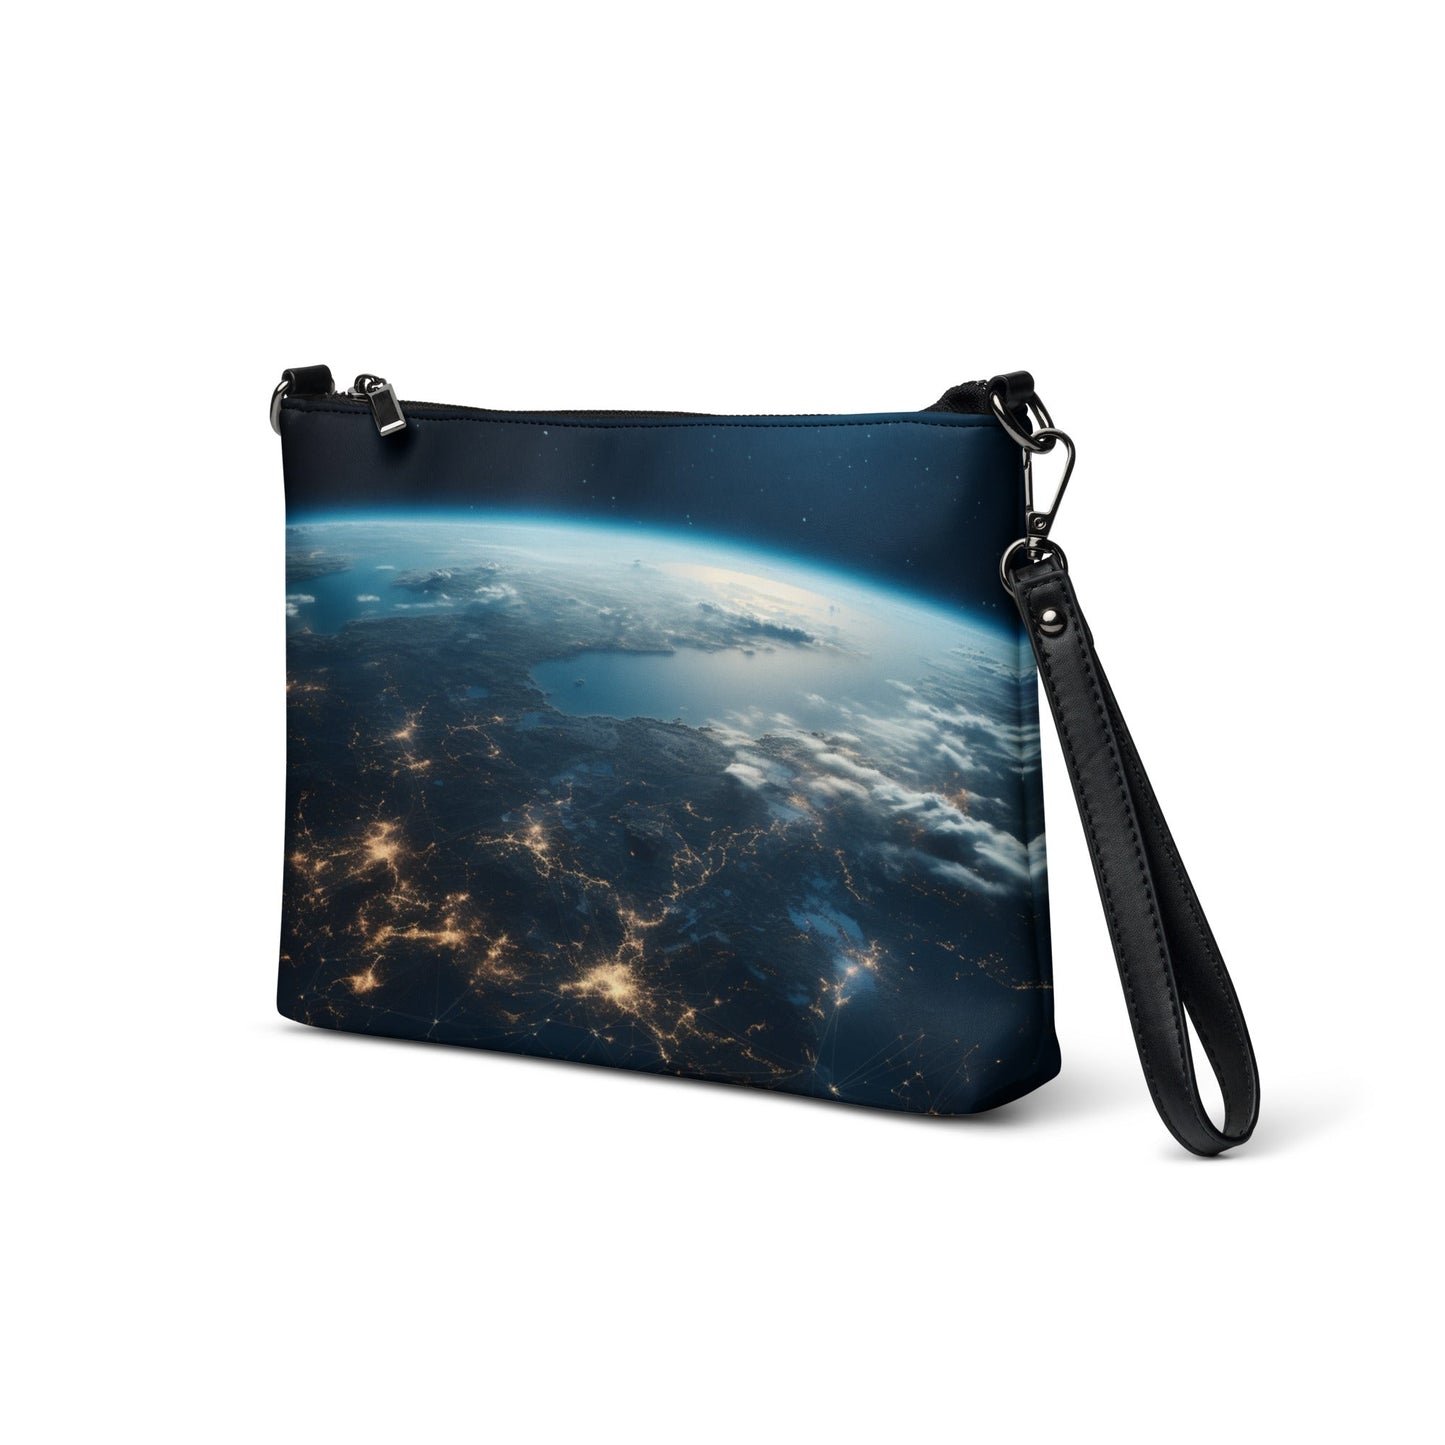 7 BILJON Global Crossbody bag by Neduz Designs